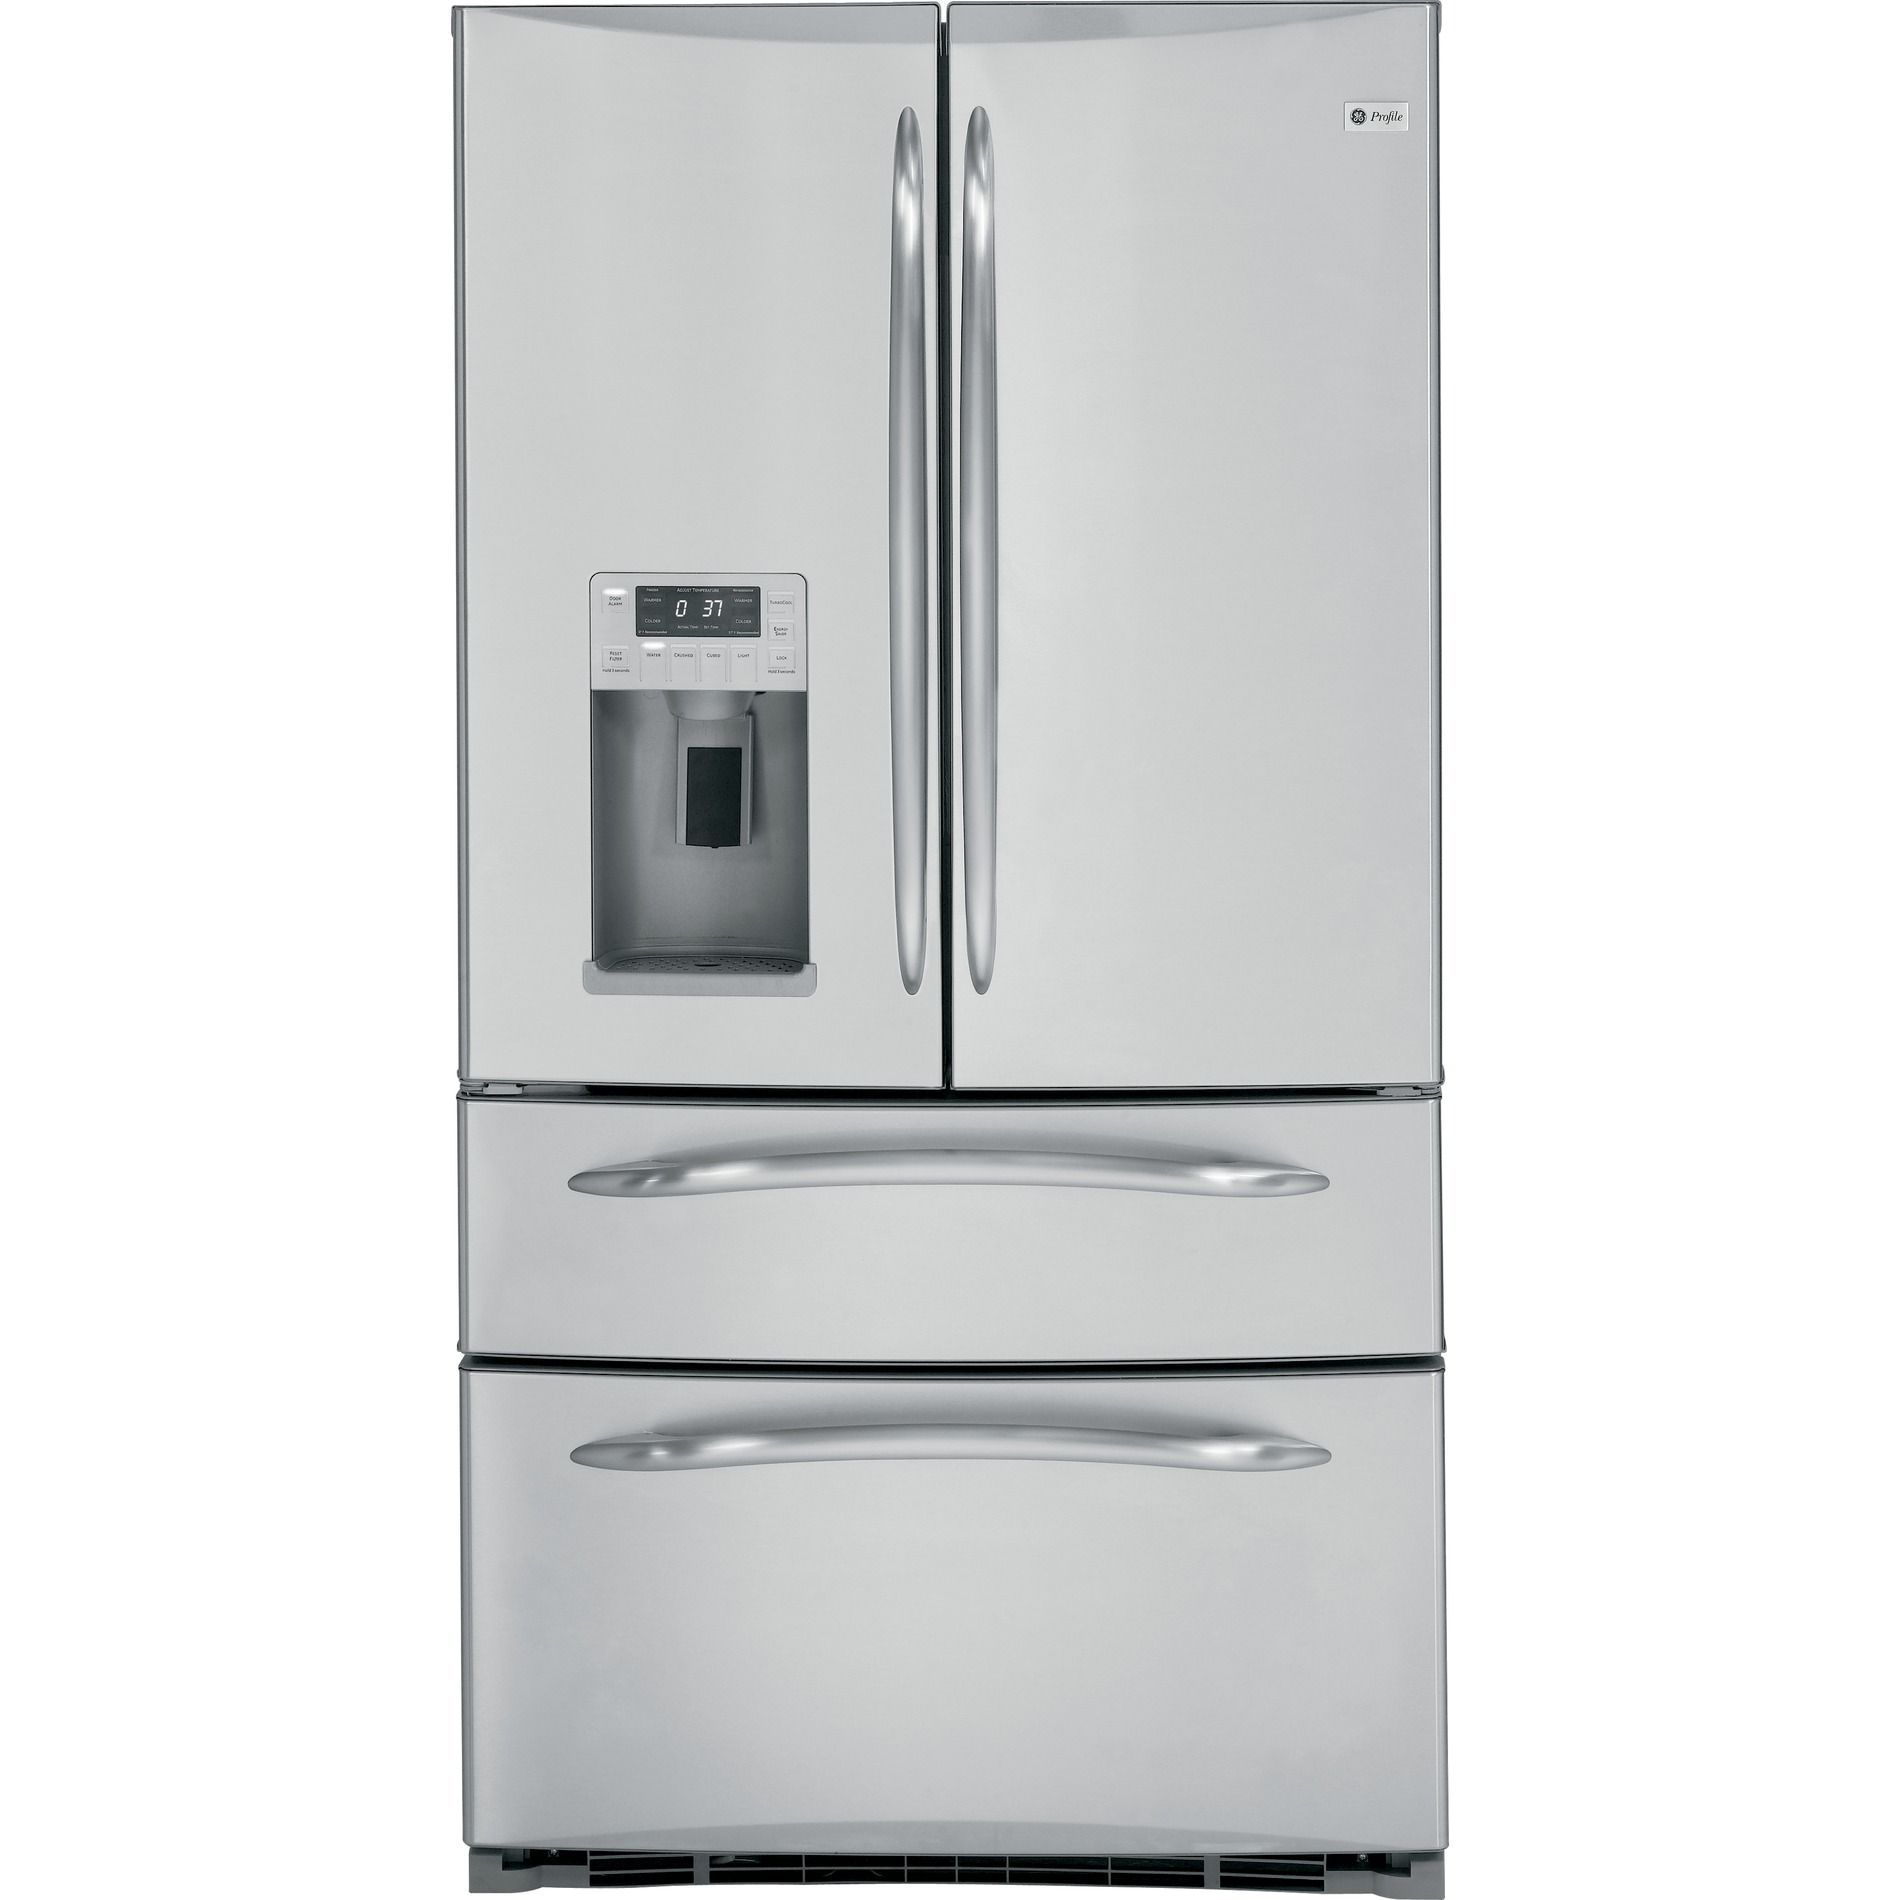 GE Profile Series 24.8 cu. ft. French-Door Bottom-Freezer Refrigerator - Stainless Steel